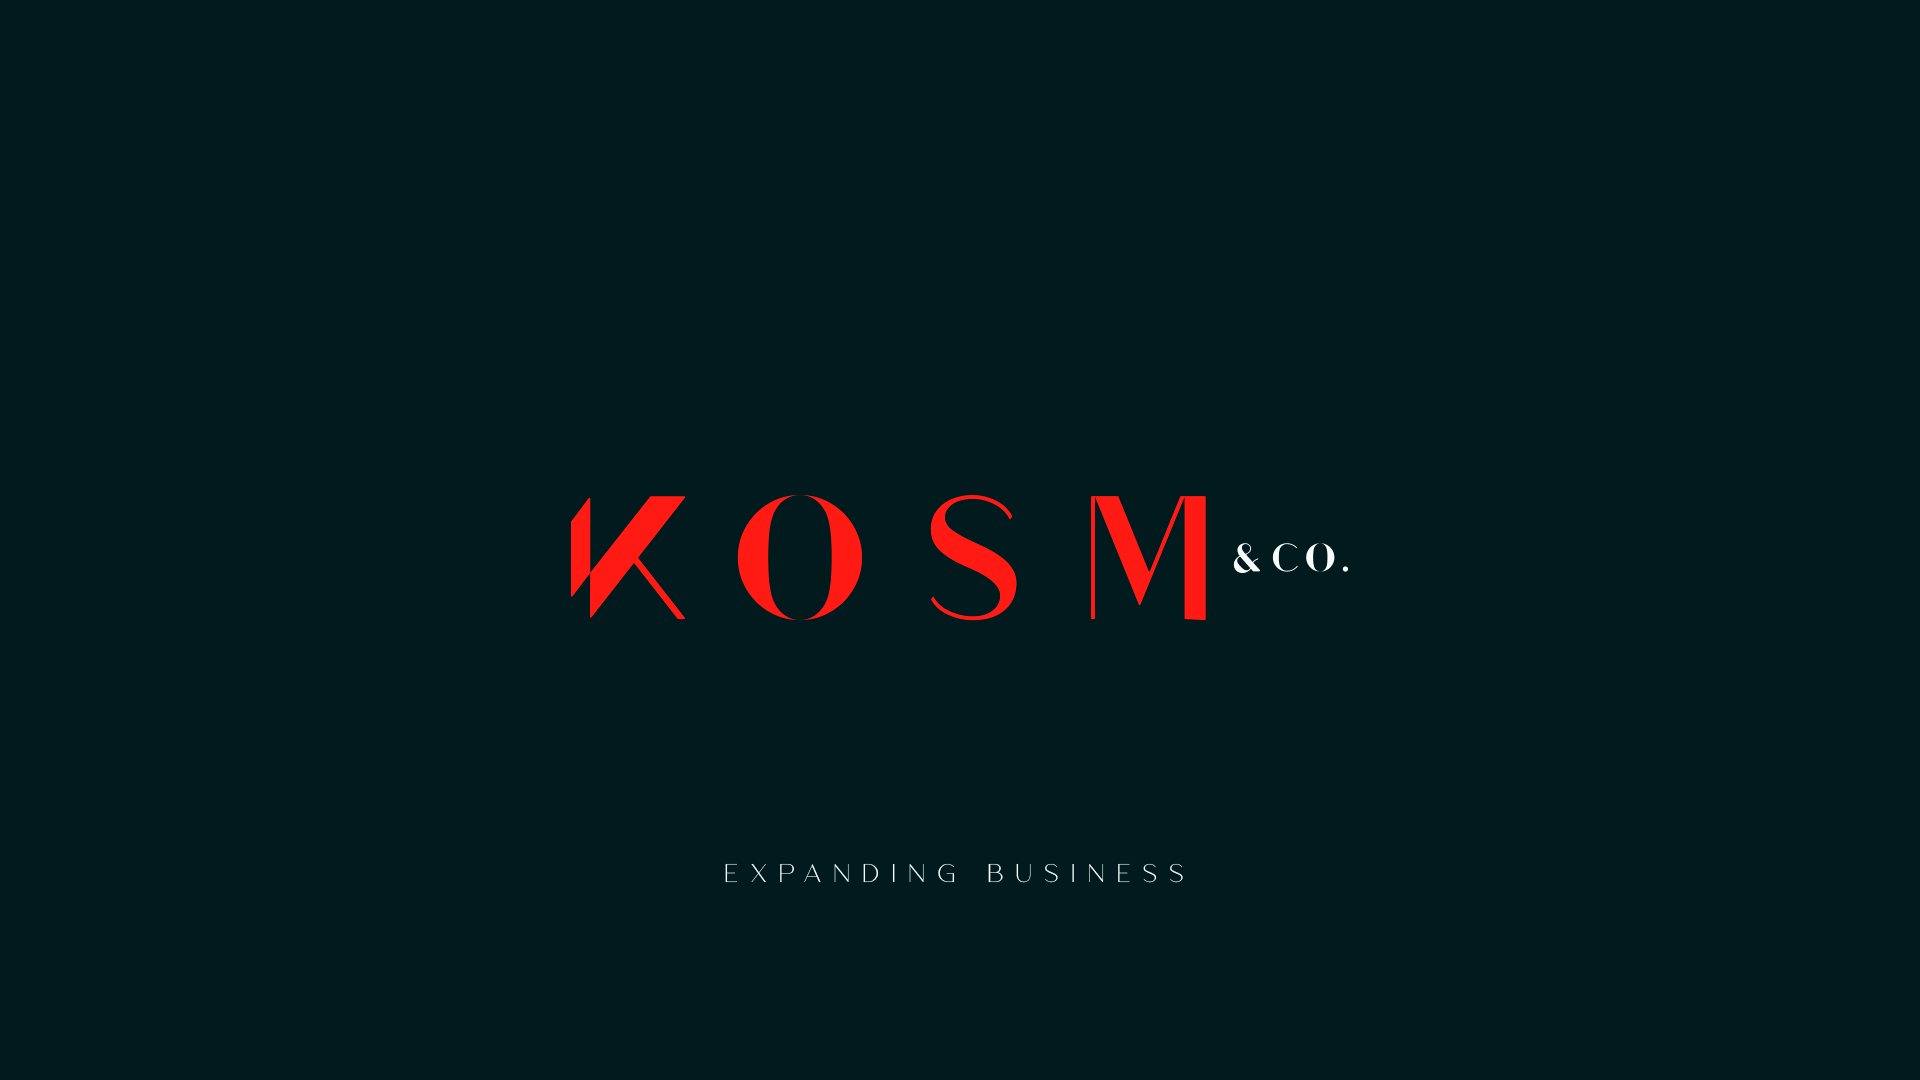 Kosm & Co.